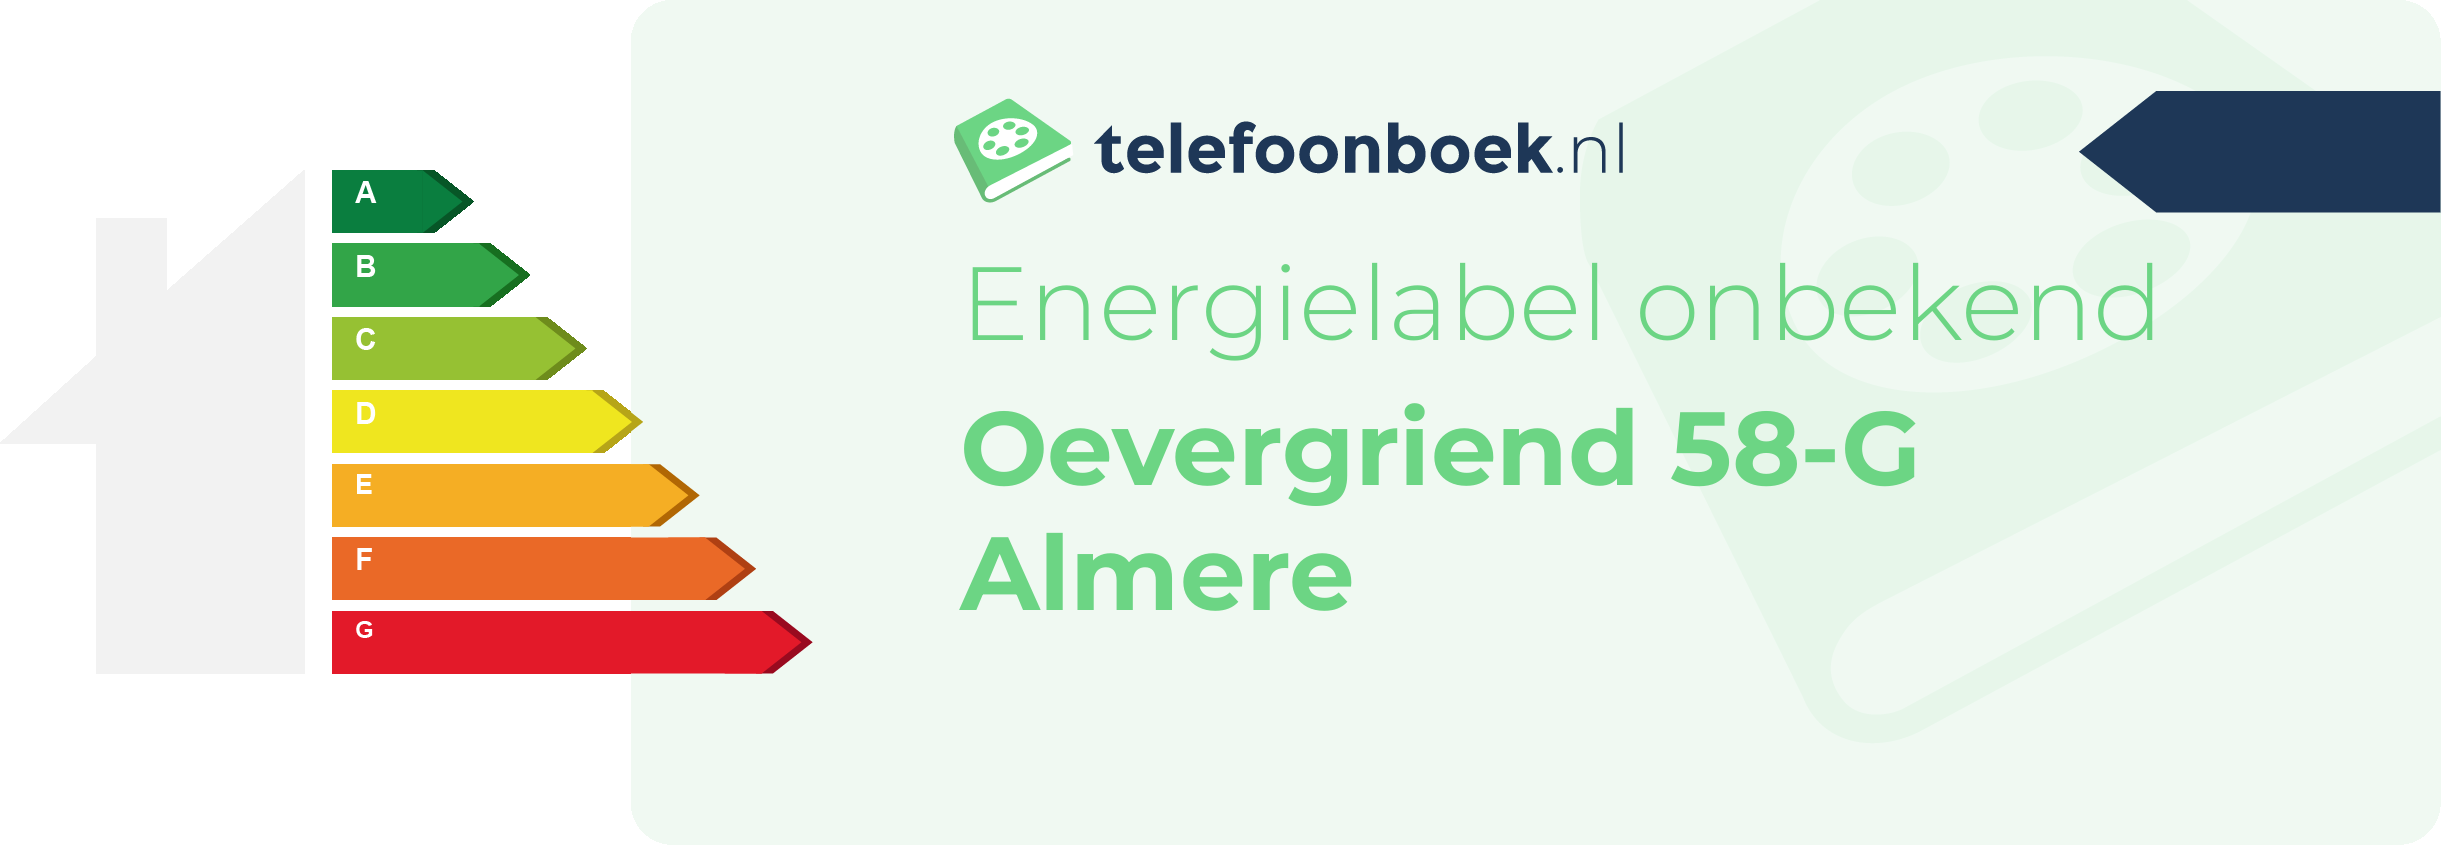 Energielabel Oevergriend 58-G Almere